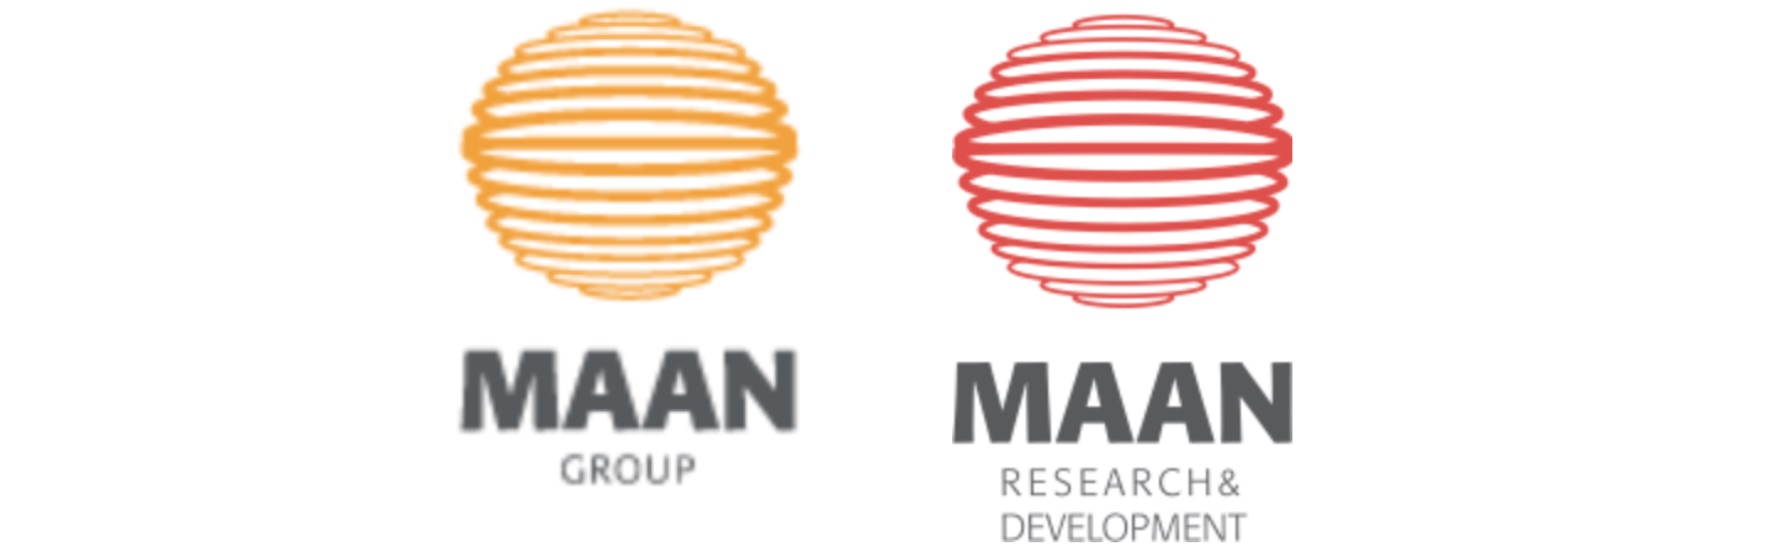 Maan case positionering merkportfolio merkarchitectuur logo